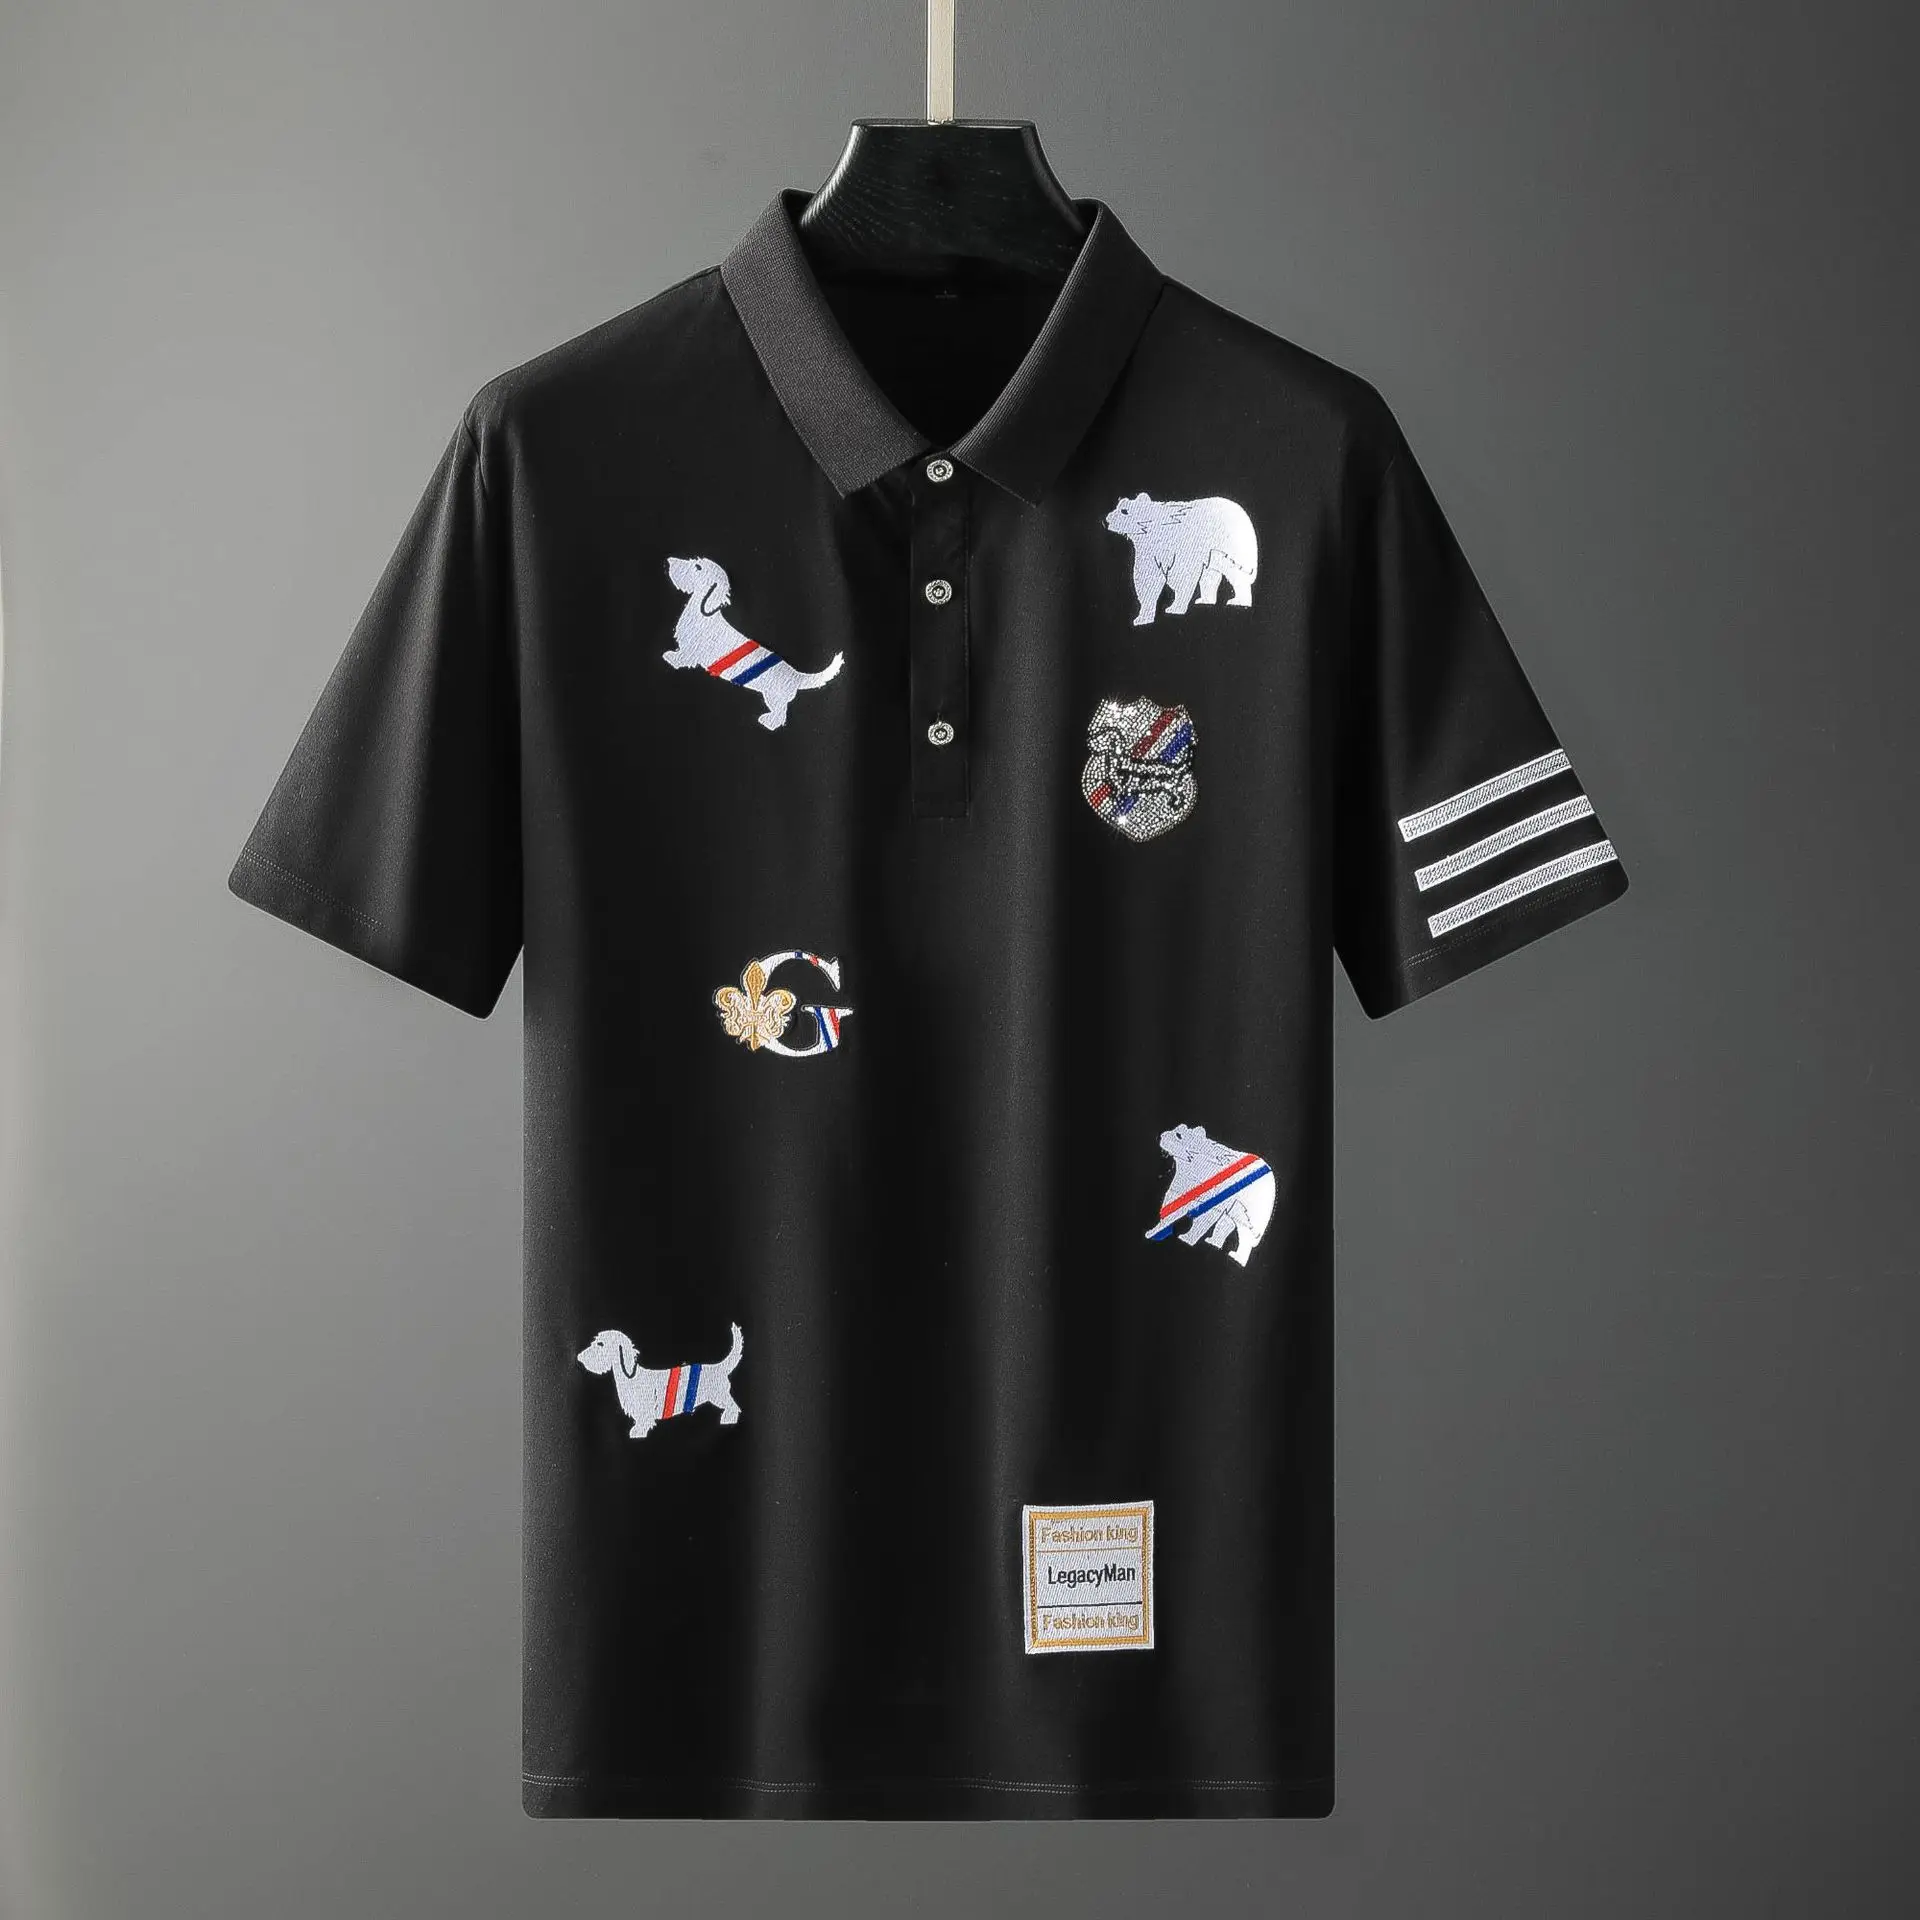 High New Men 22 Embroidered poodle Diamond Rhinestones Striped Polo Shirts Shirt Hip Hop Skateboard Cotton Polo Top M-4XL #A680